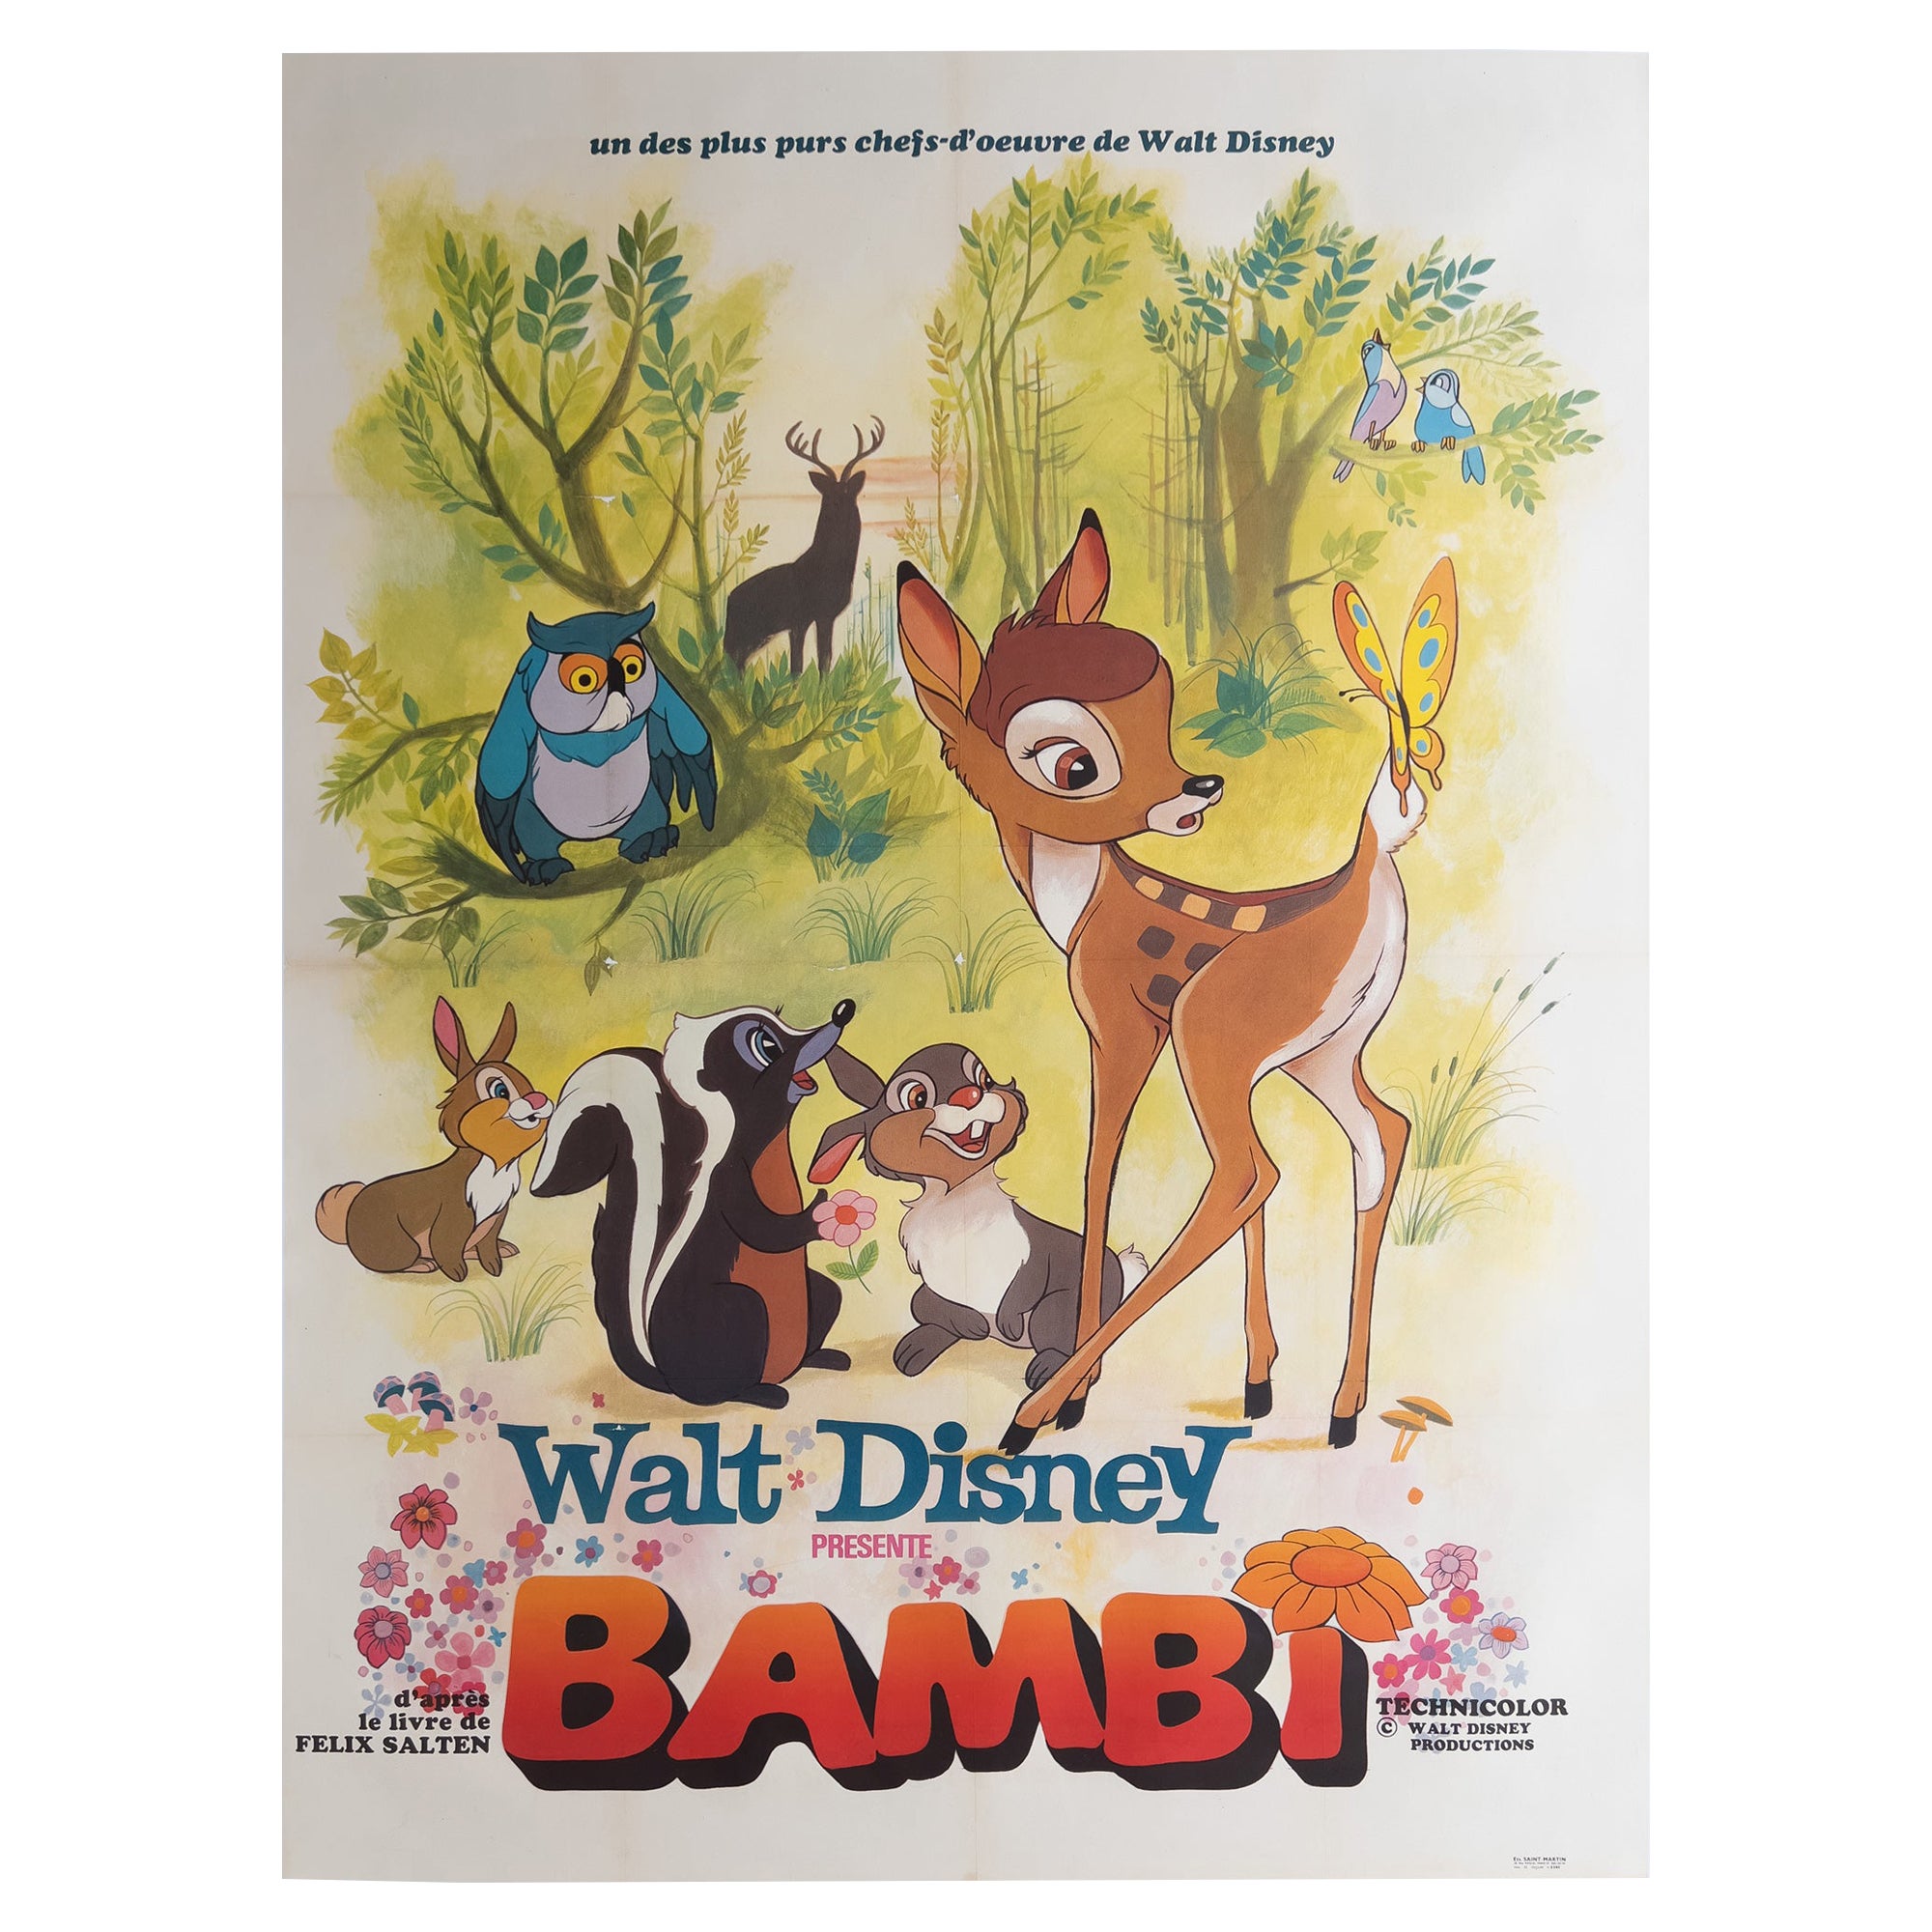 Bambi 1960s French Grande Film Movie Poster, Disney